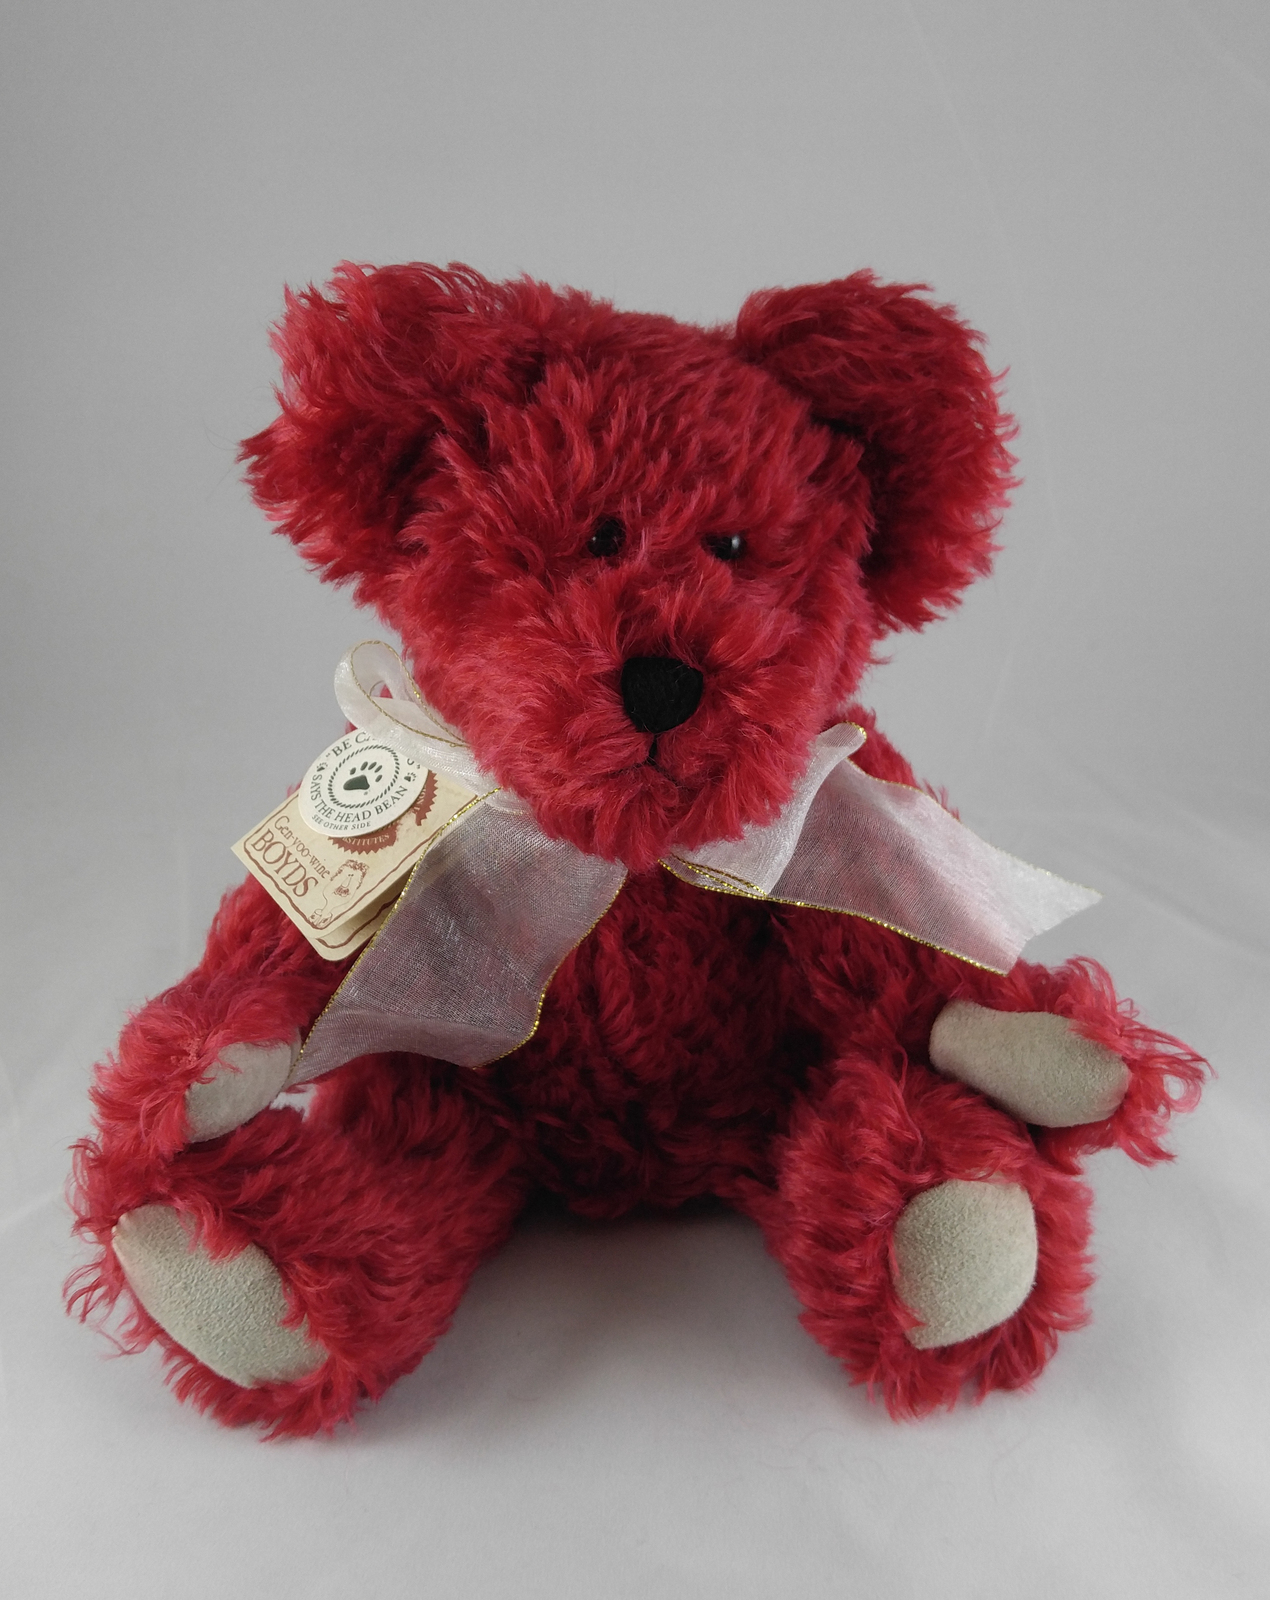 Primary image for Boyd’s Bears “Scarlett Bearington” Handmade Jointed Red Mohair Teddy 590043-02